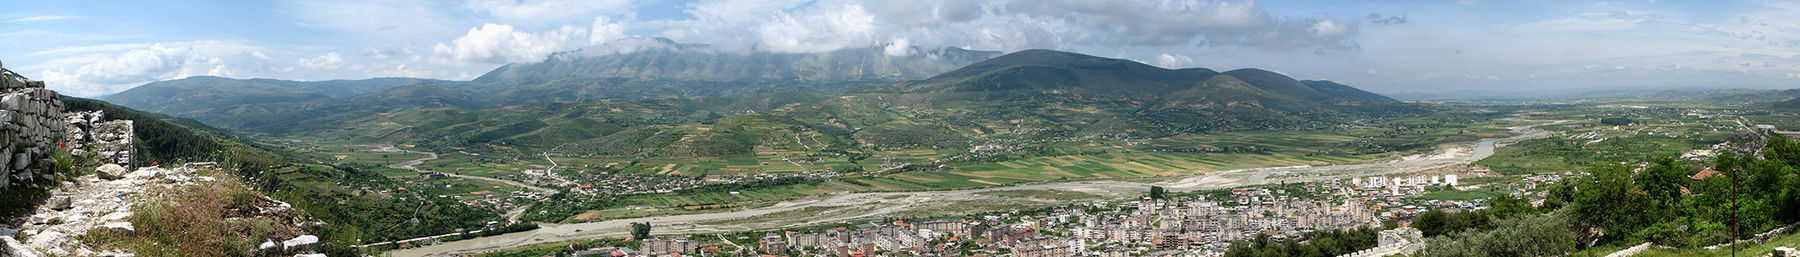 Albanija banner.jpg